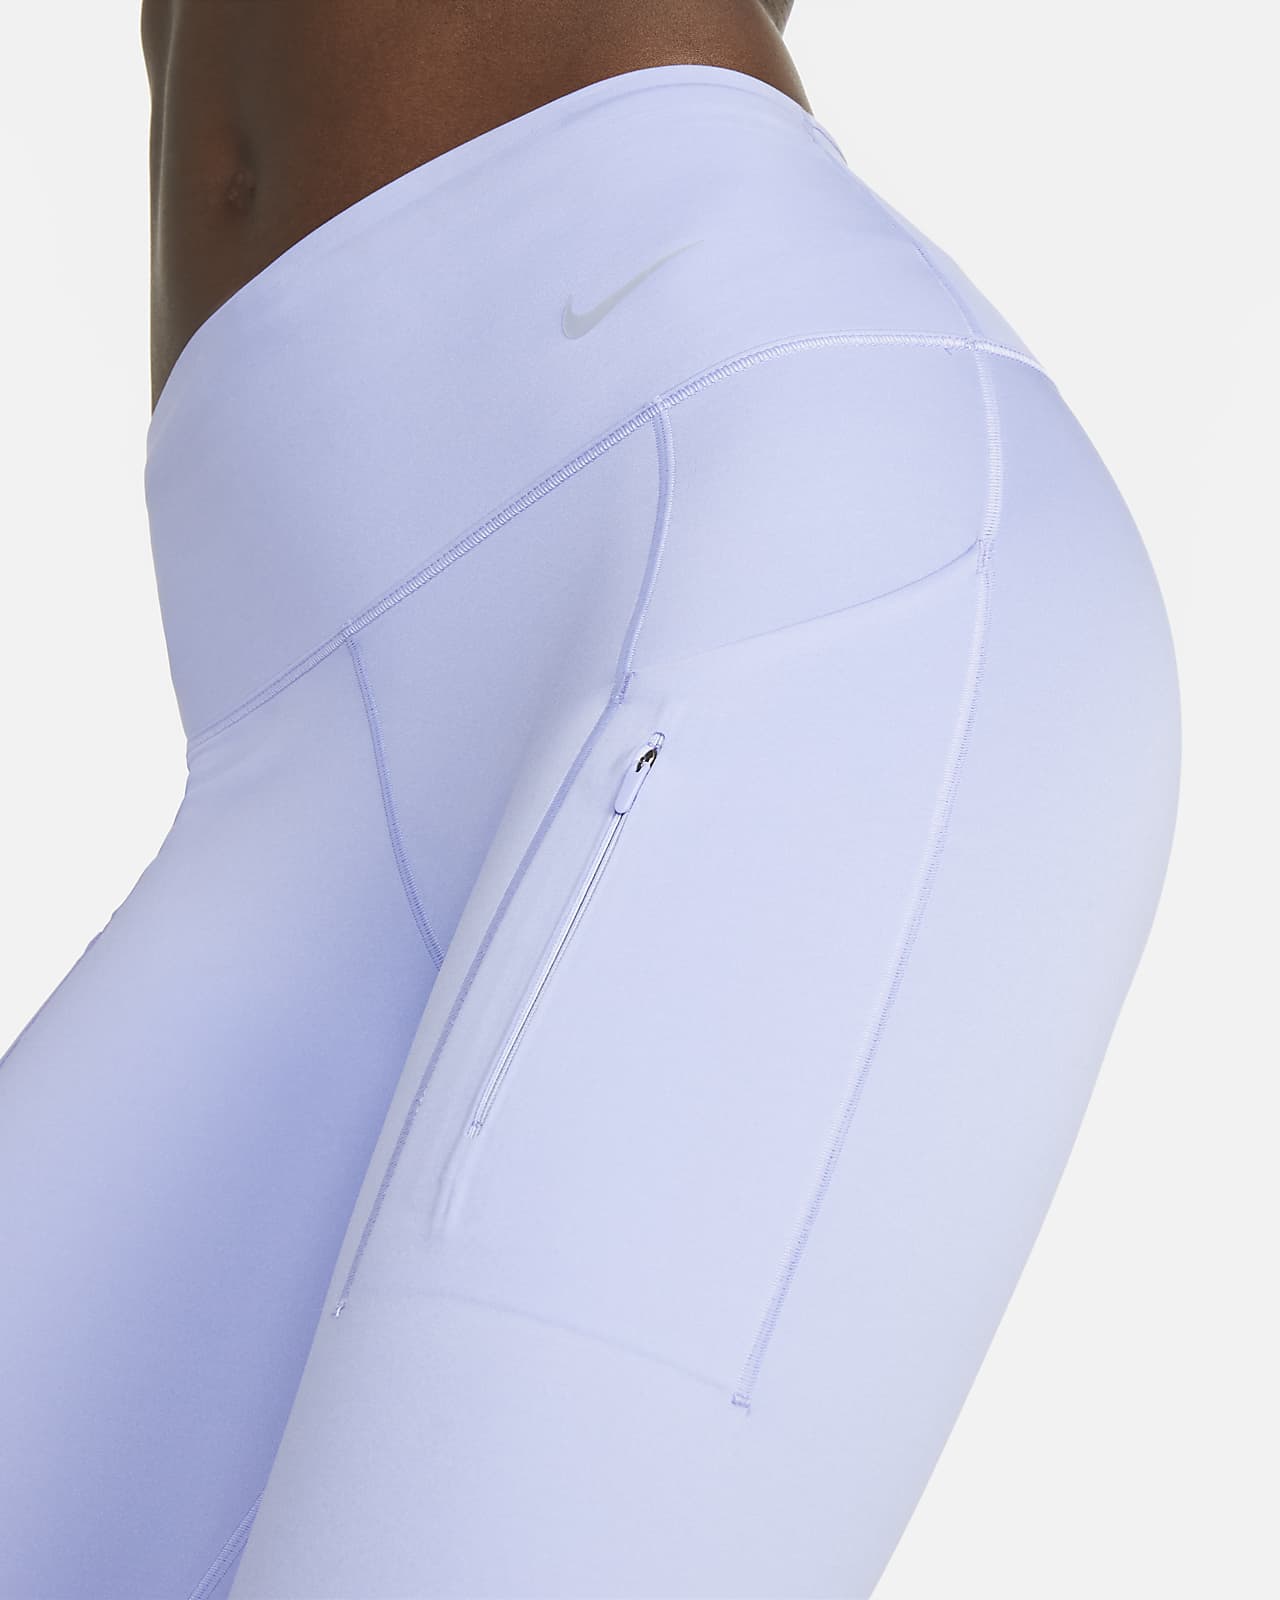 Nike Running Swoosh Dri-FIT 7/8 leggings in purple